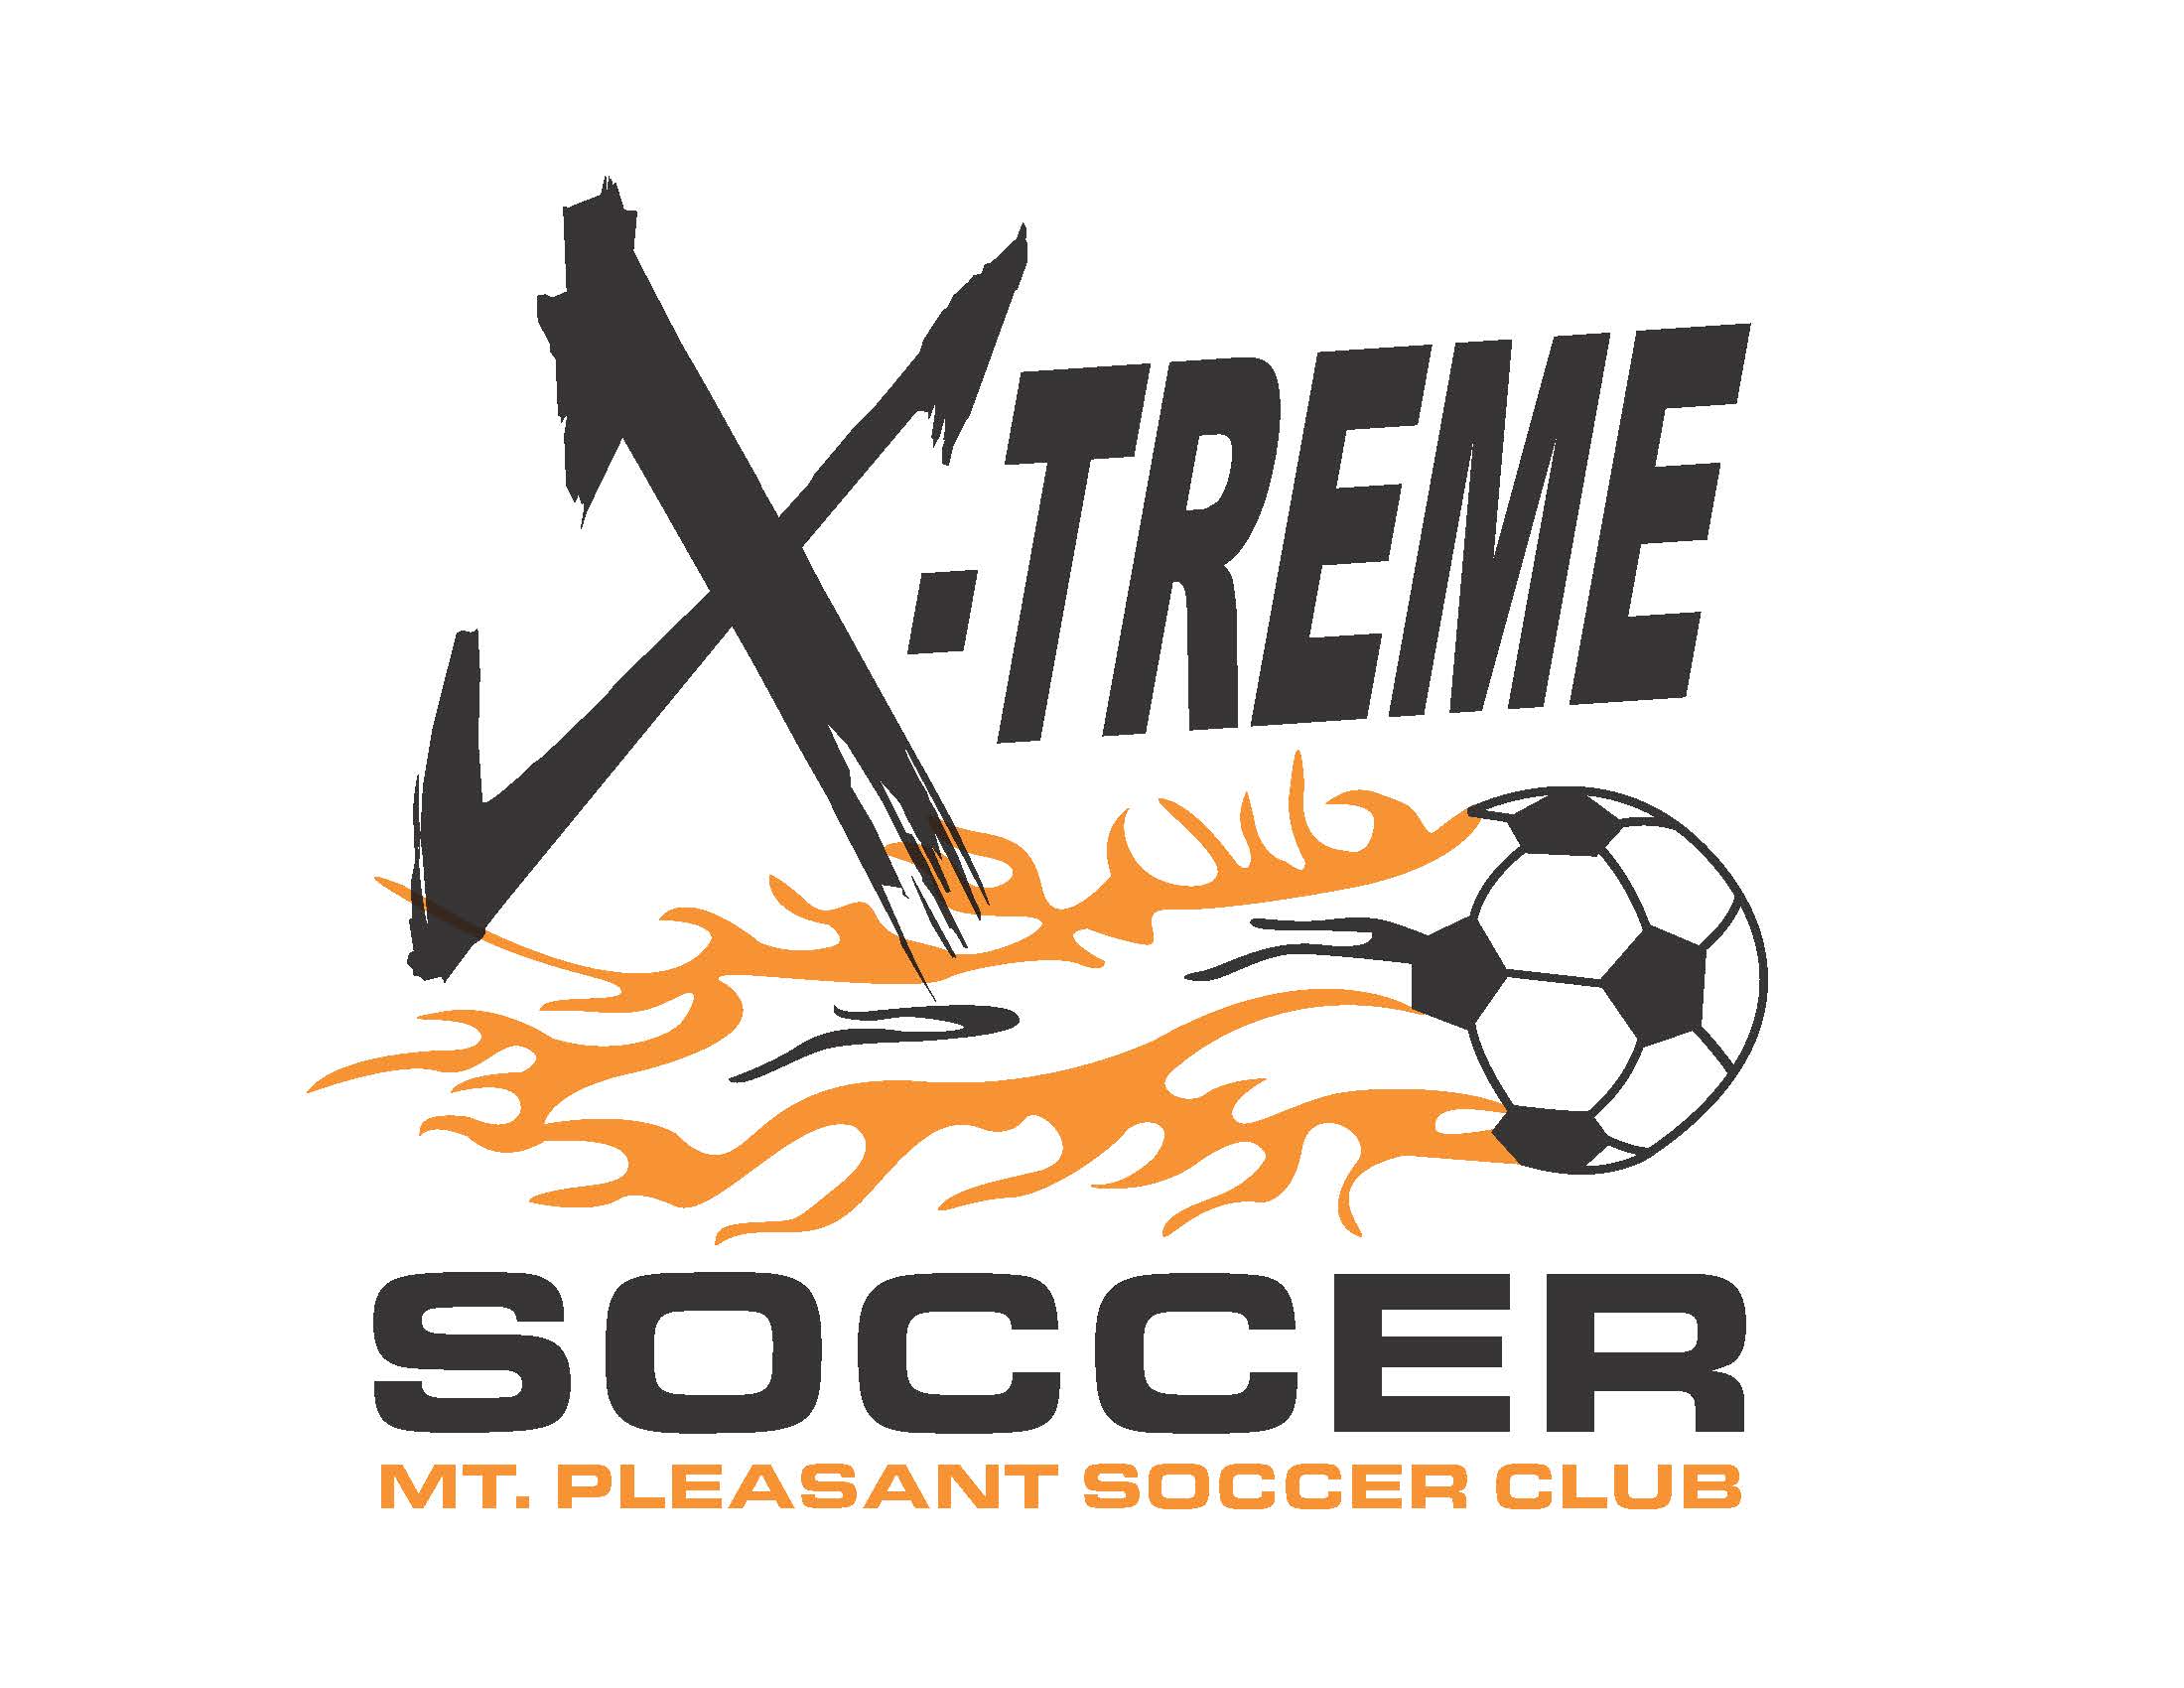 Mount Pleasant Soccer Club team badge